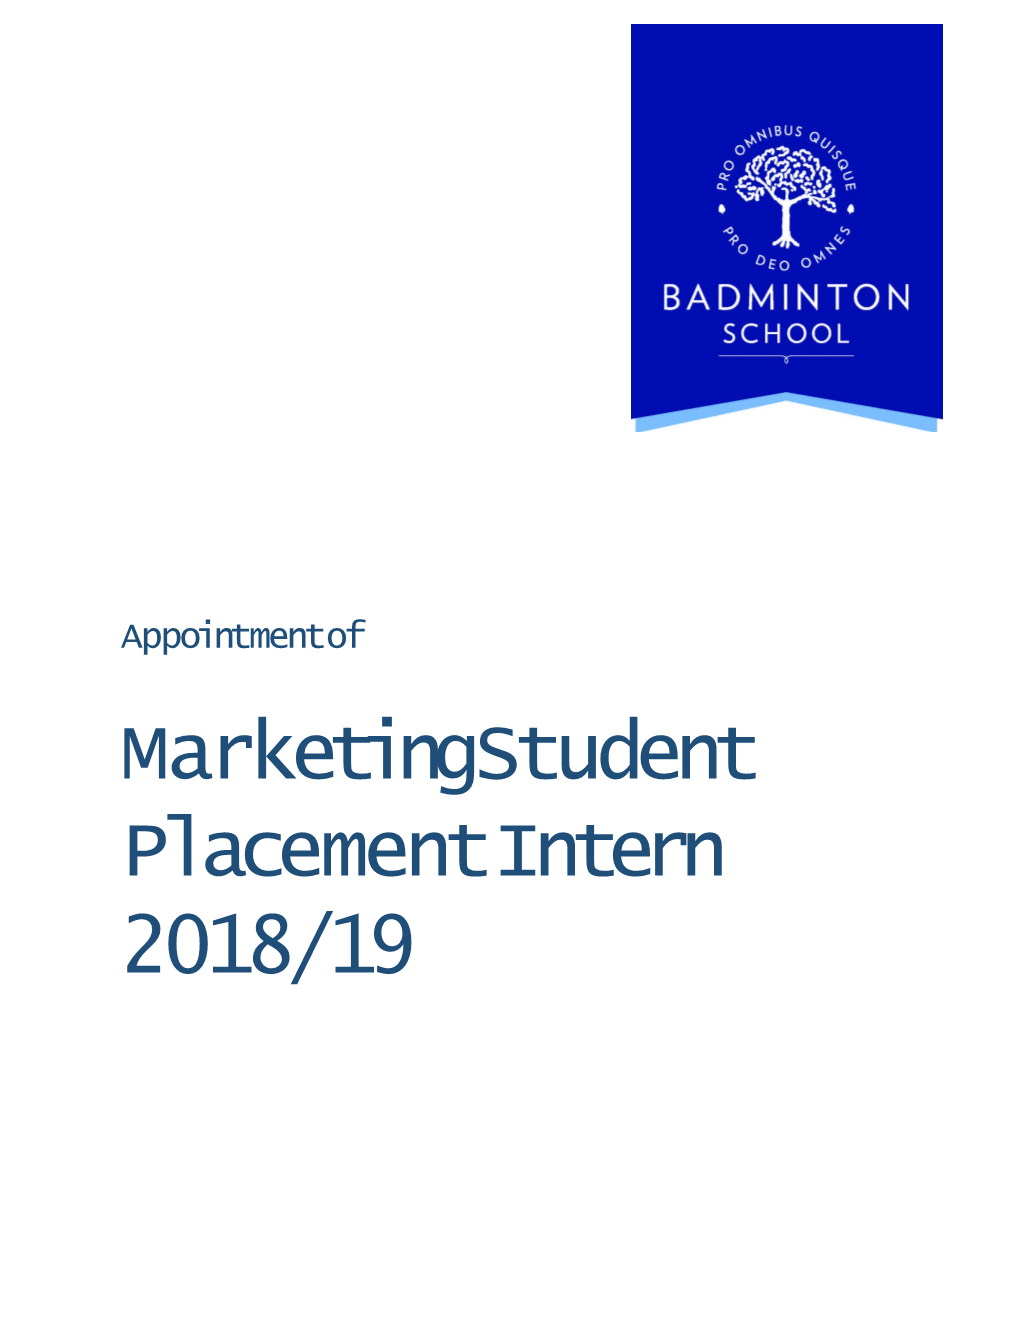 Marketing Student Placement Intern 2018/19